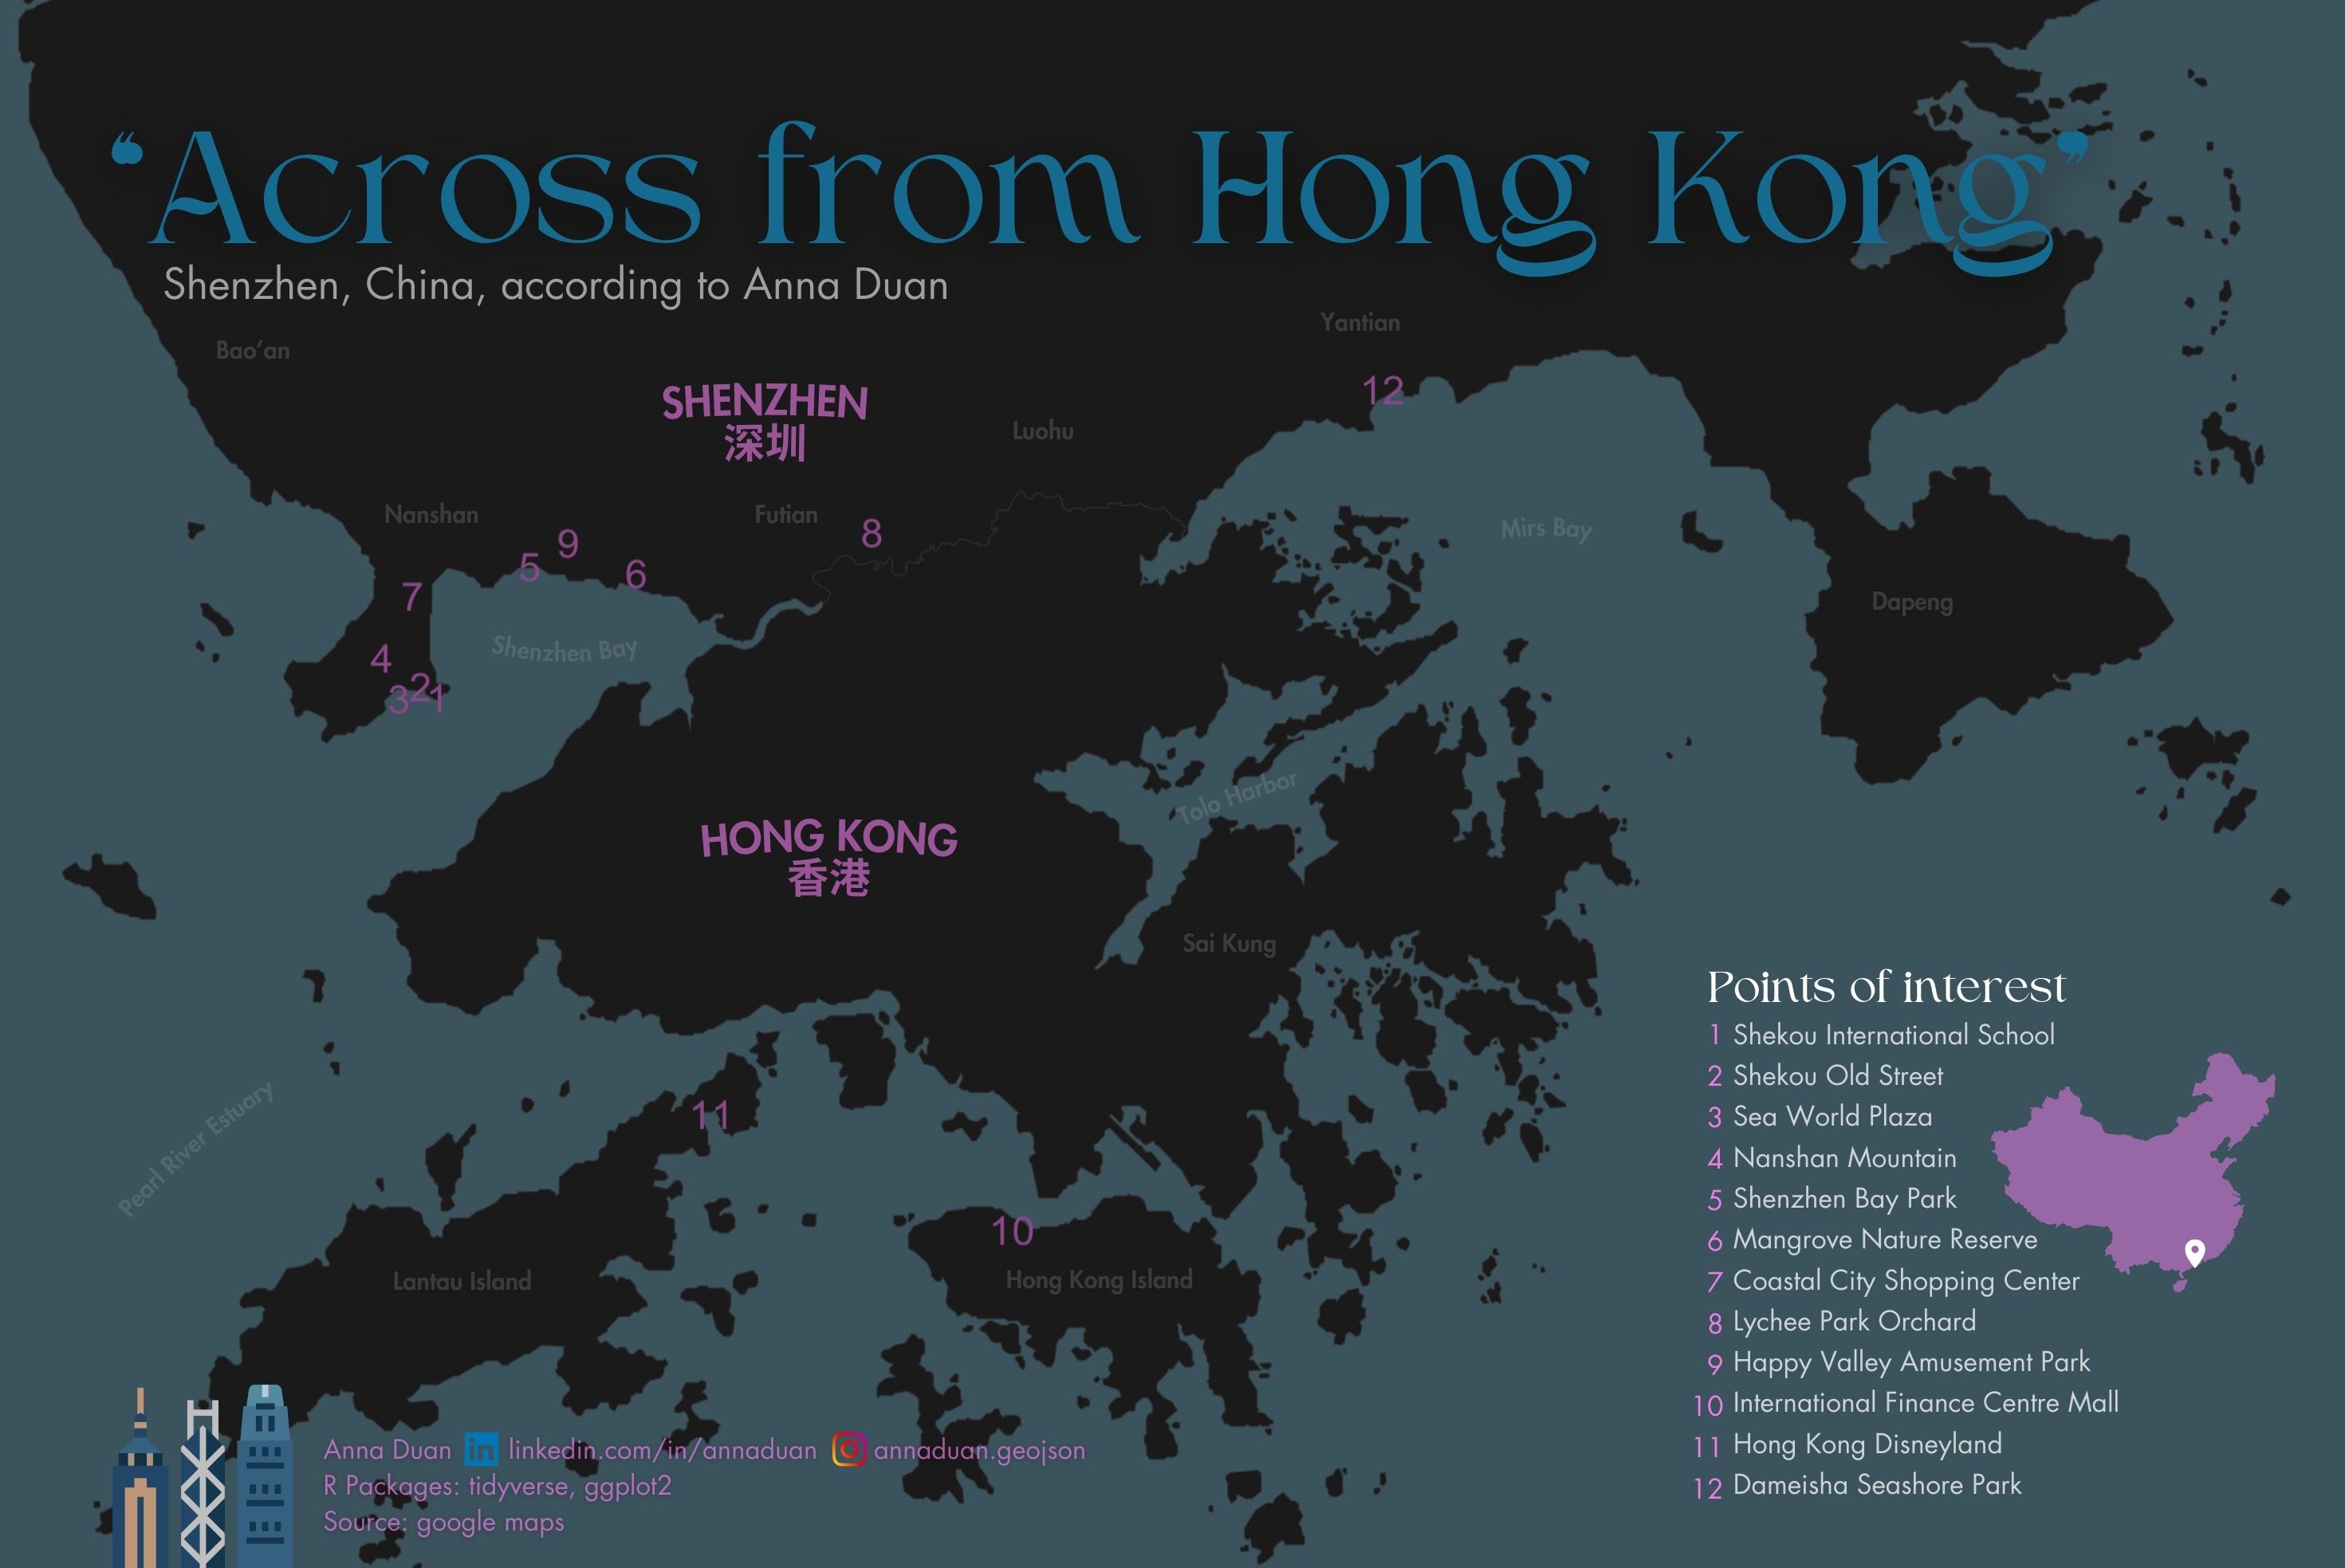 Thumbnail image of Across from Hong Kong by Anna Duan